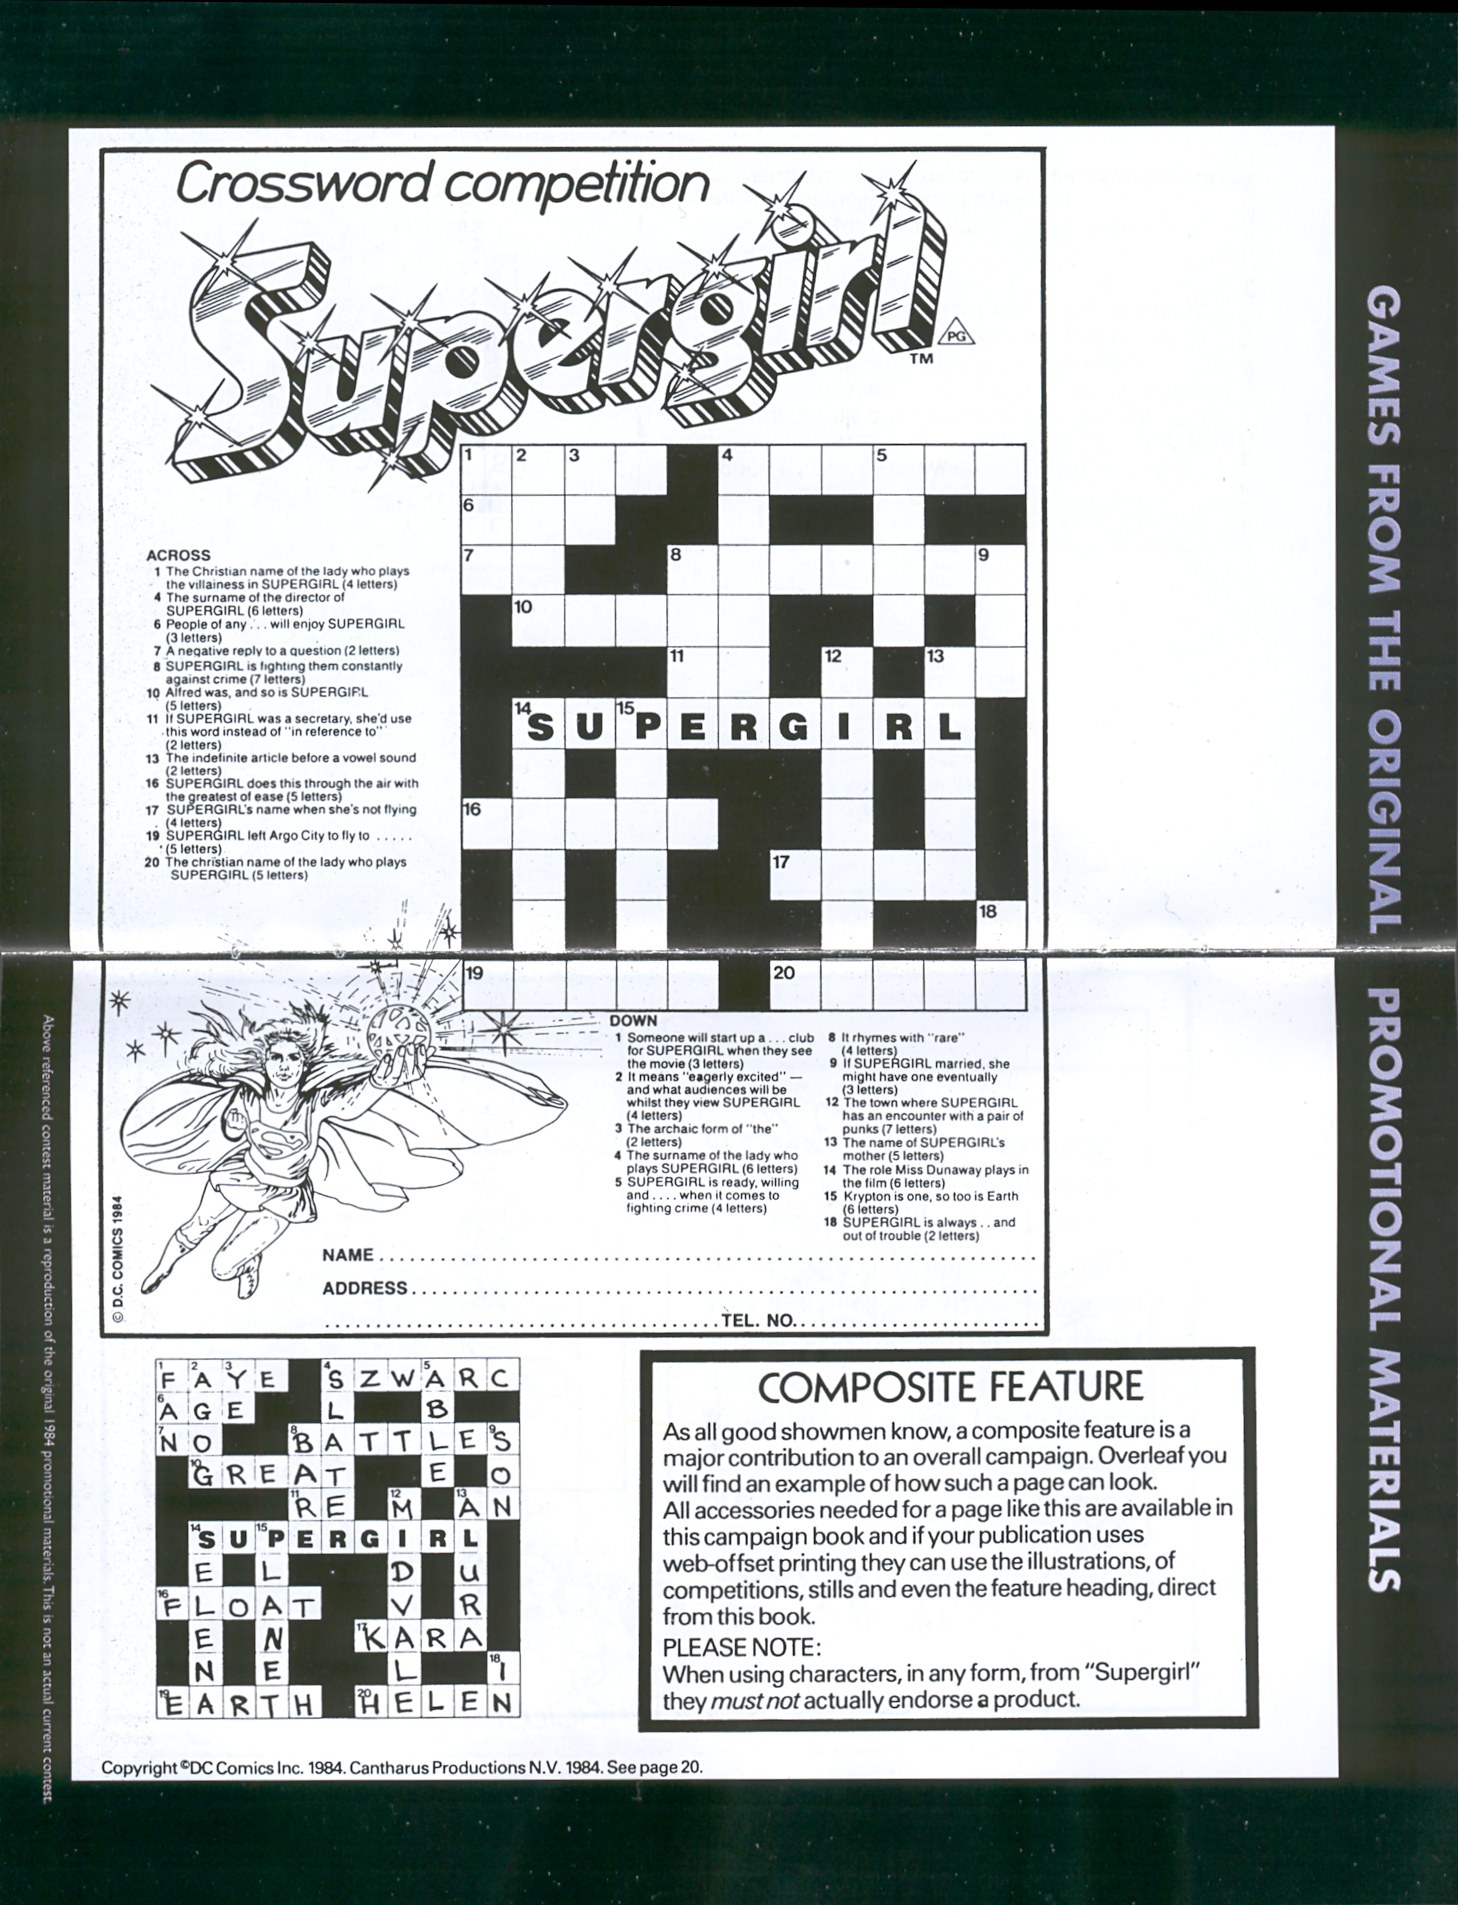 SUPERGIRL LE Booklet p09-10